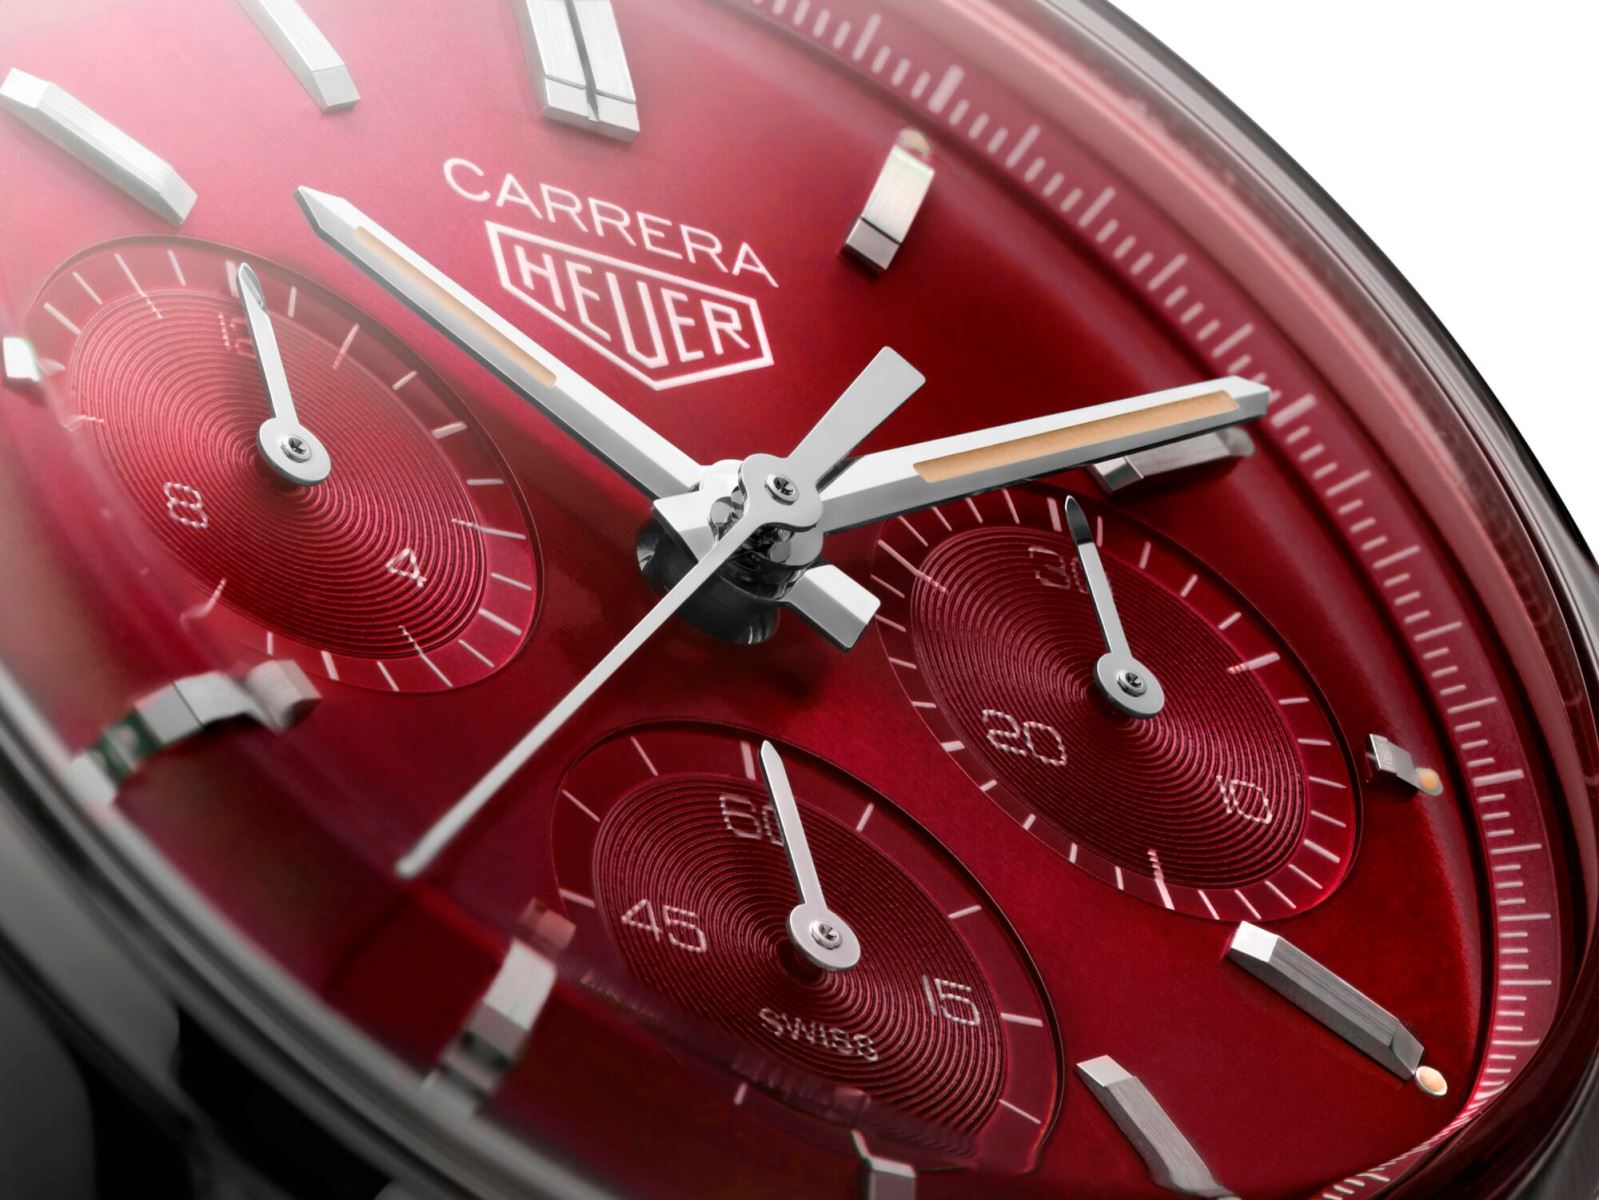 đồng hồ TAG Heuer Carrera mặt số đỏ